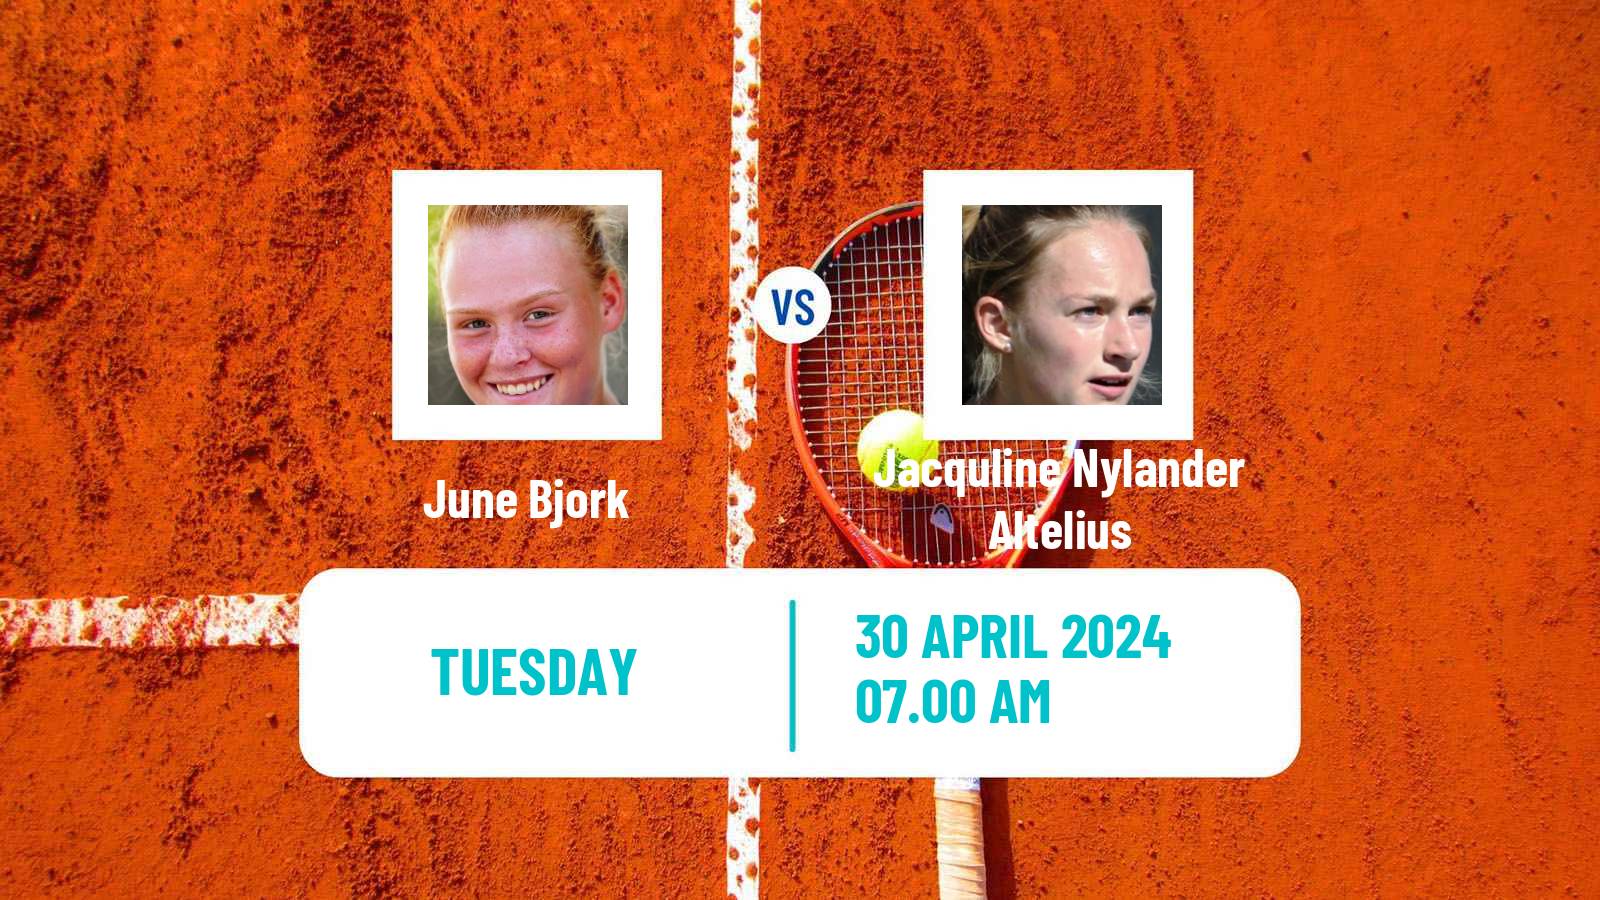 Tennis ITF W15 Varberg Women June Bjork - Jacquline Nylander Altelius